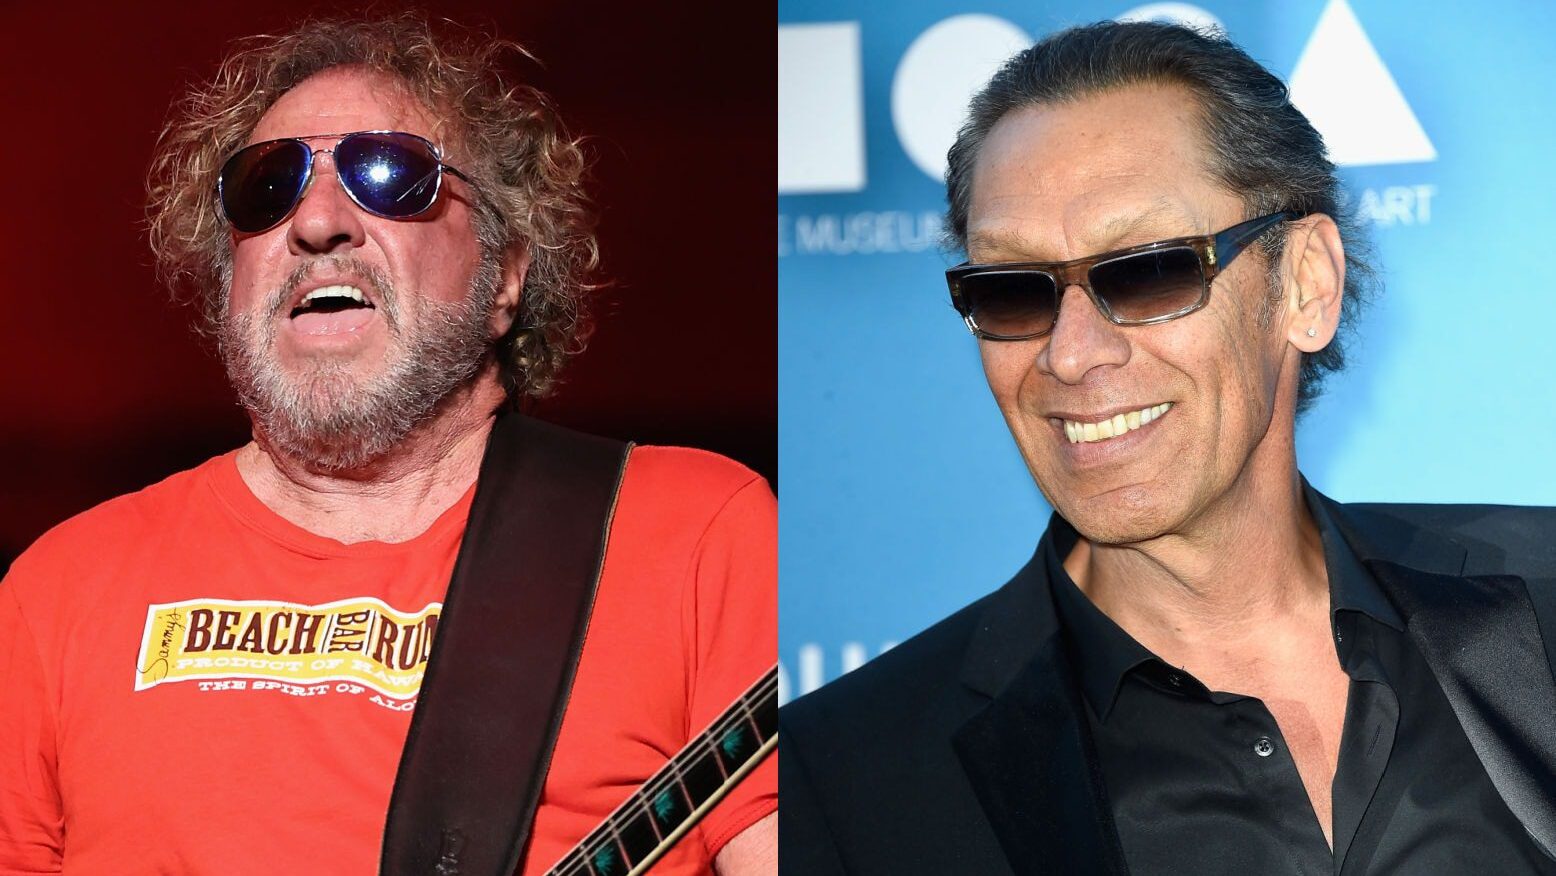 Alex Van Halen ignora convites de Sammy Hagar para reunião e turnê